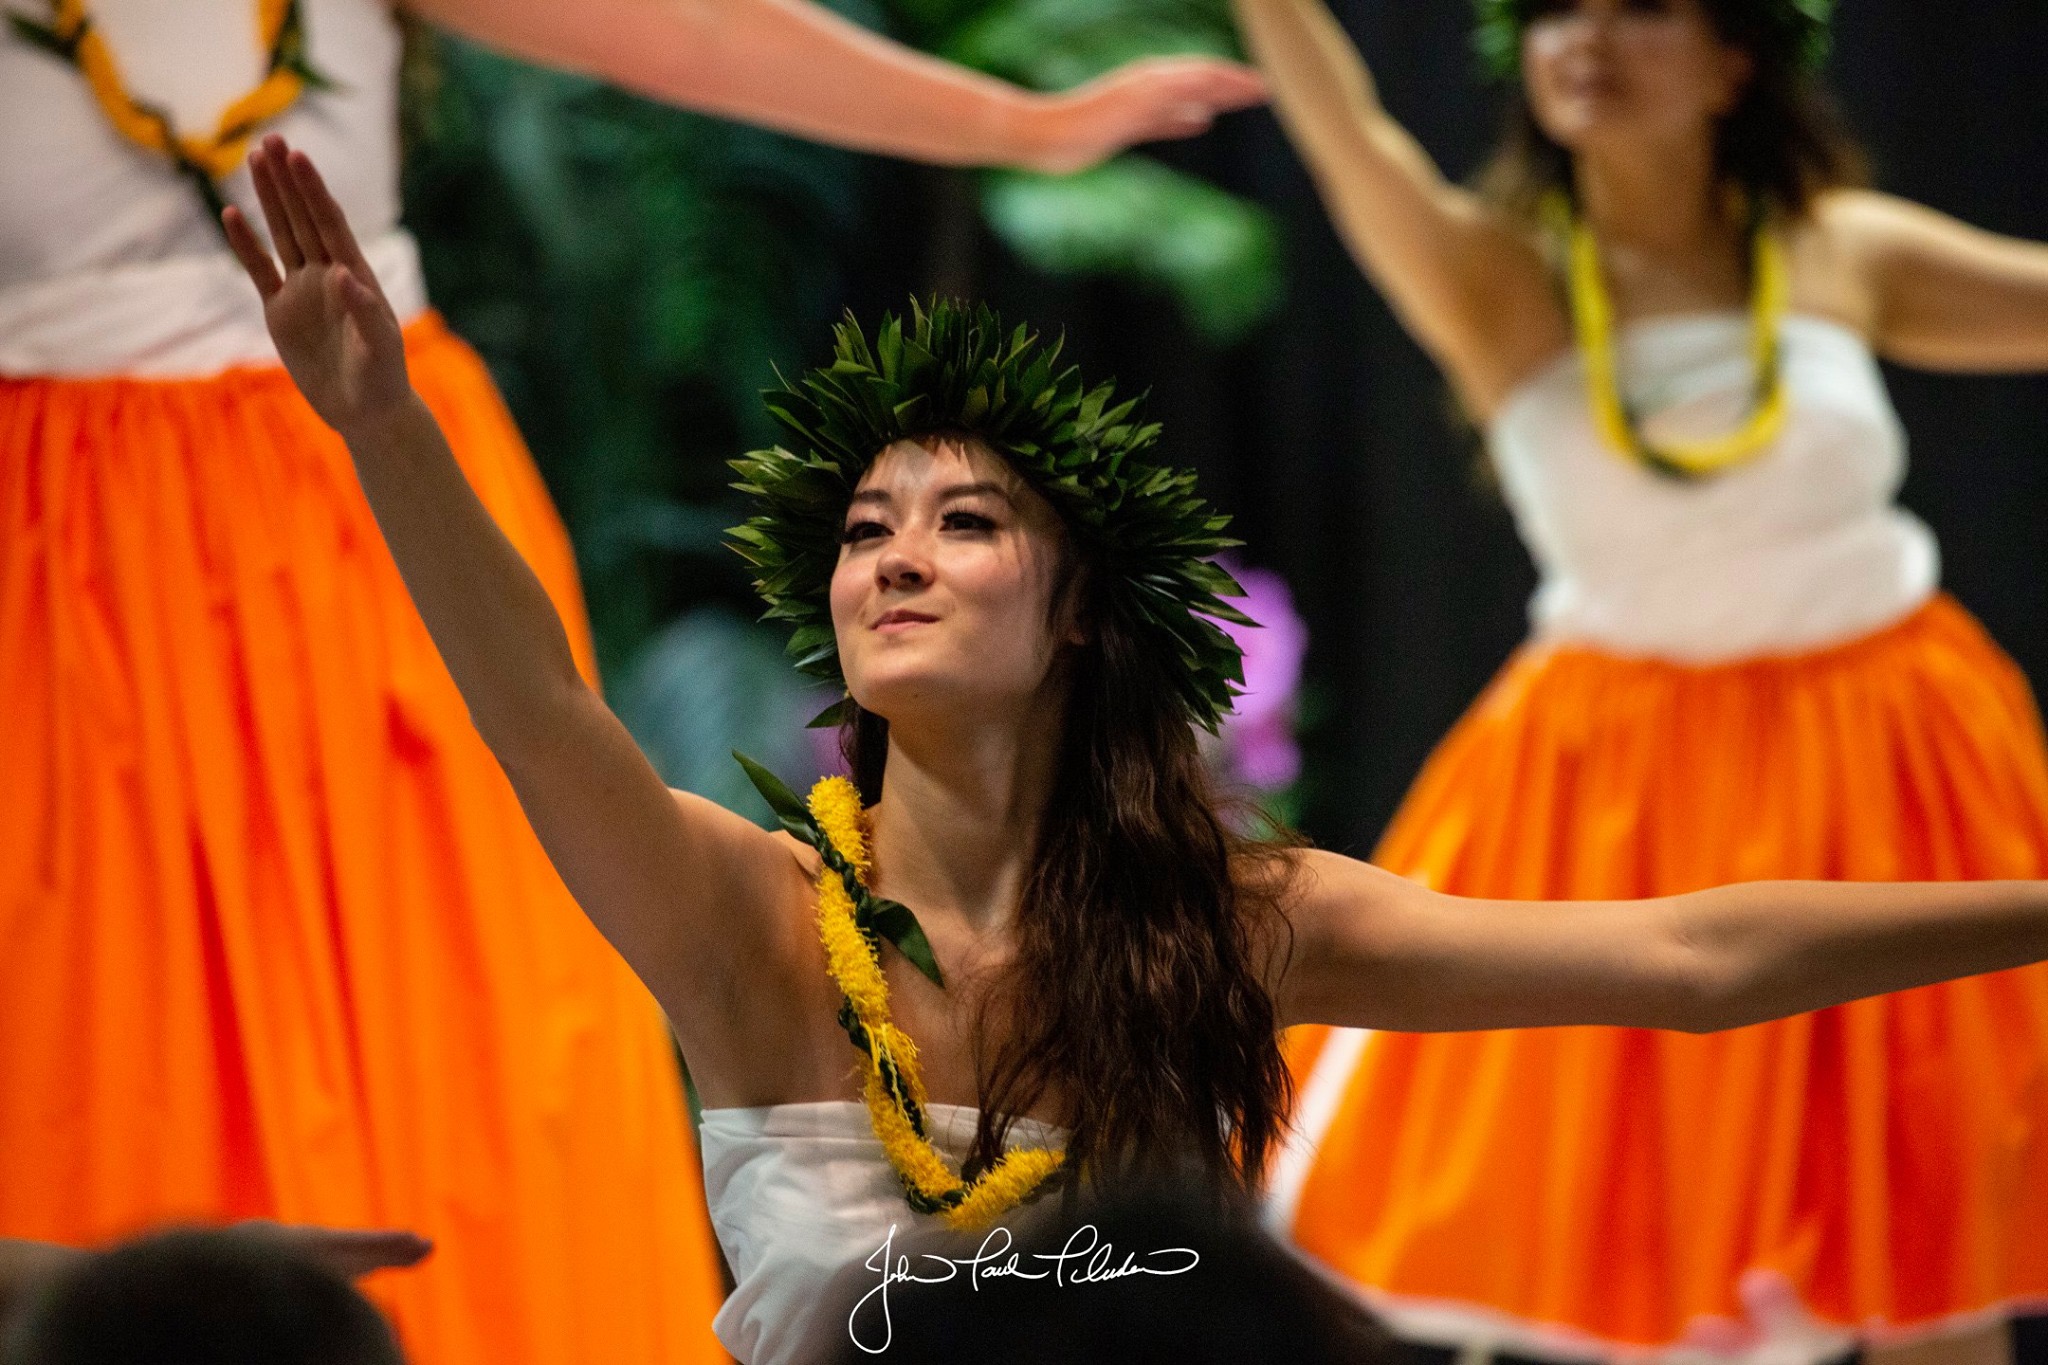  Marisa Mihori has danced hula in a Hawaiian culture school for 15 years. 